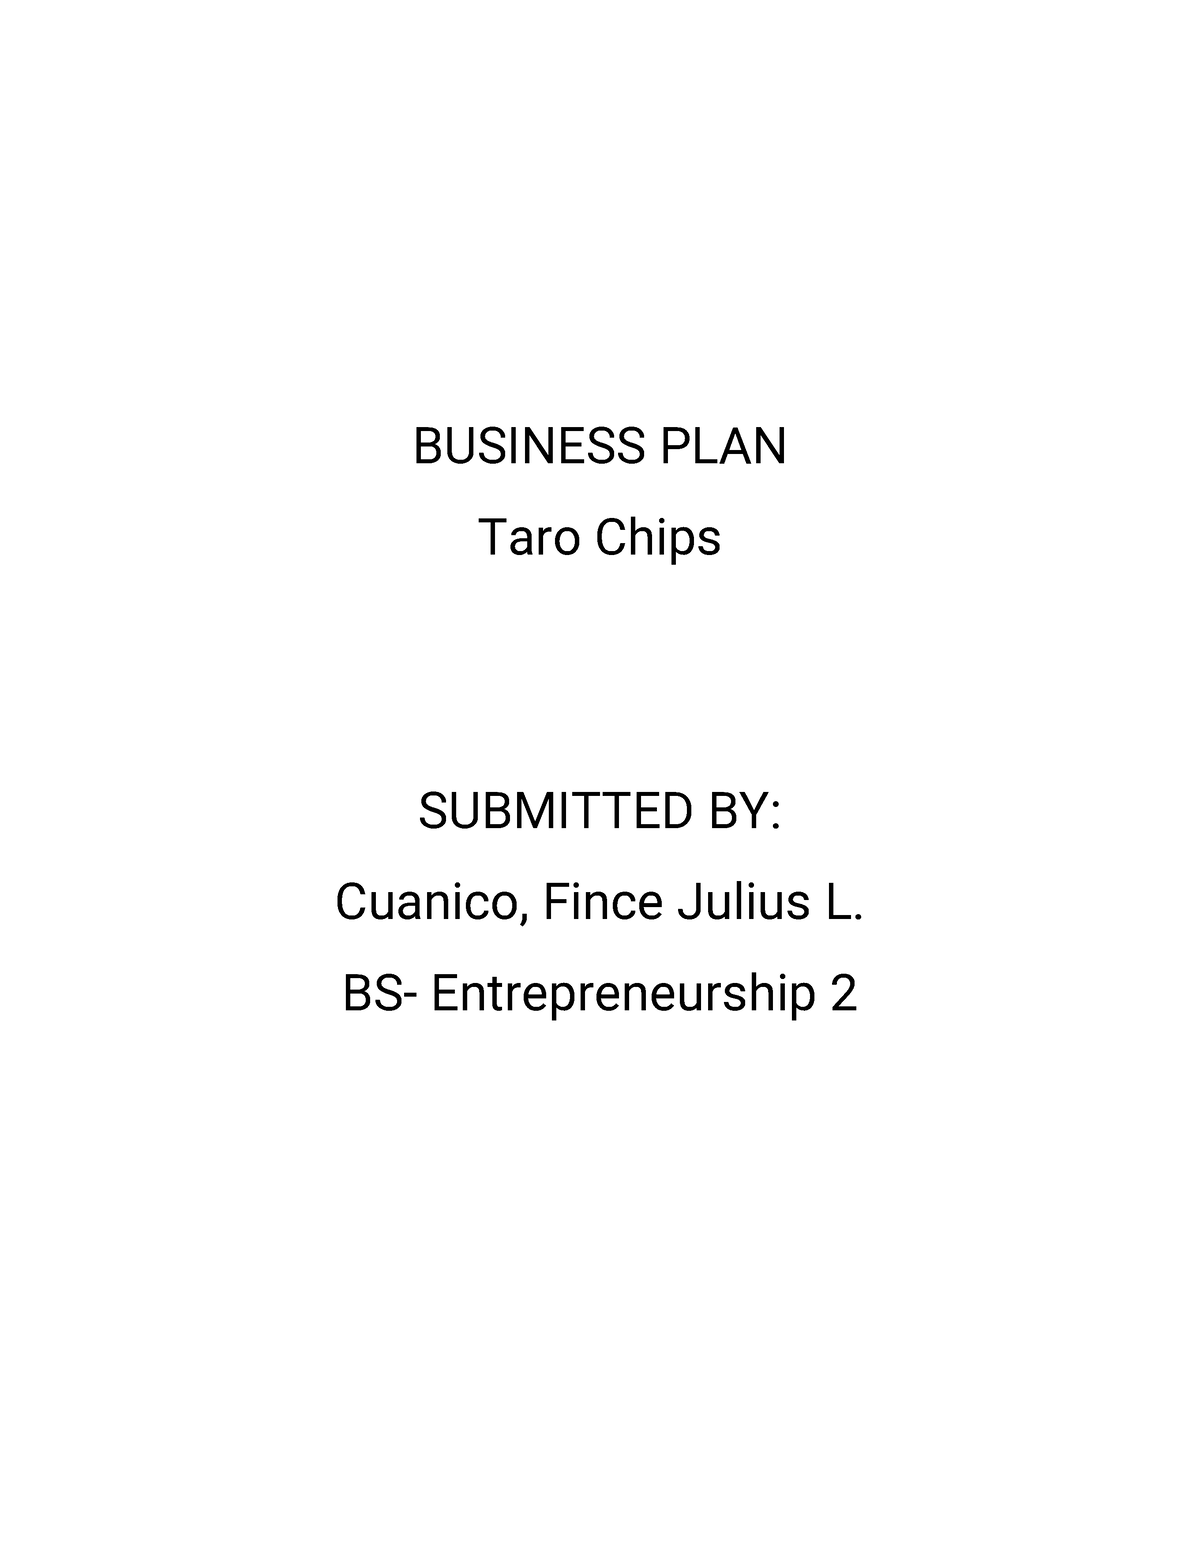 simple business plan taro chips